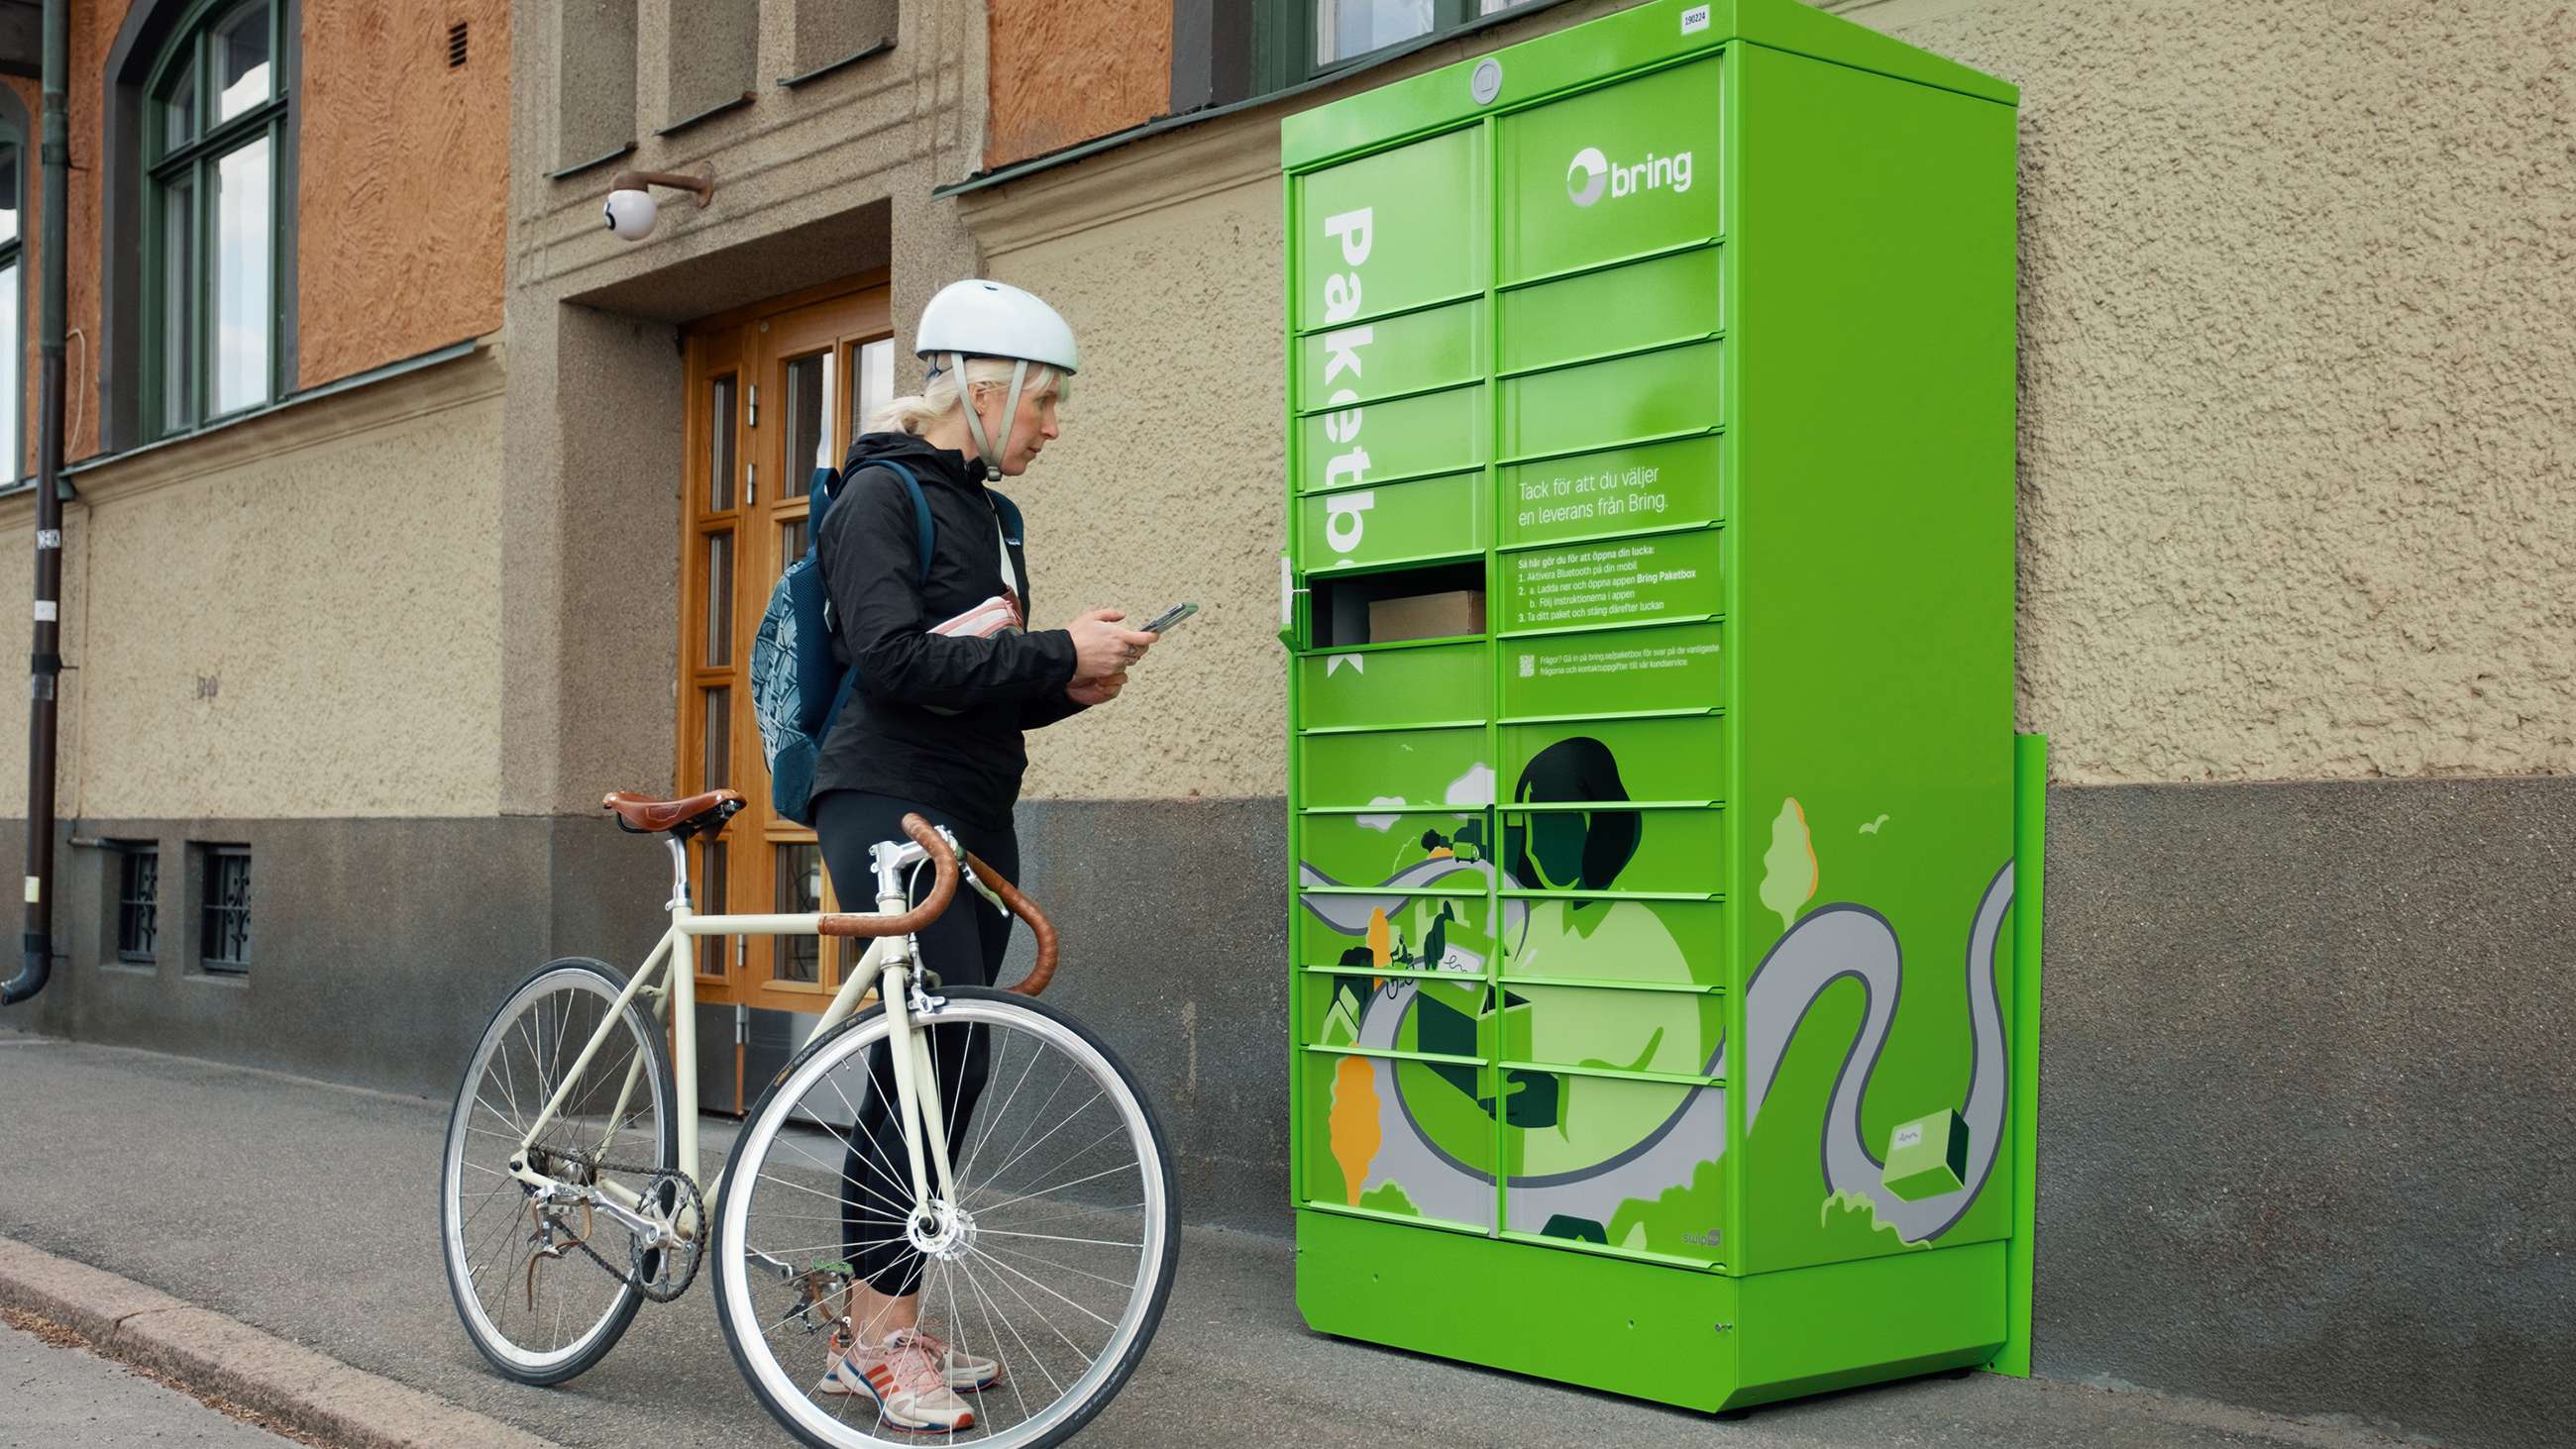 Woman wearing a bicycle helmet picking up parcel in a Bring parcel locker